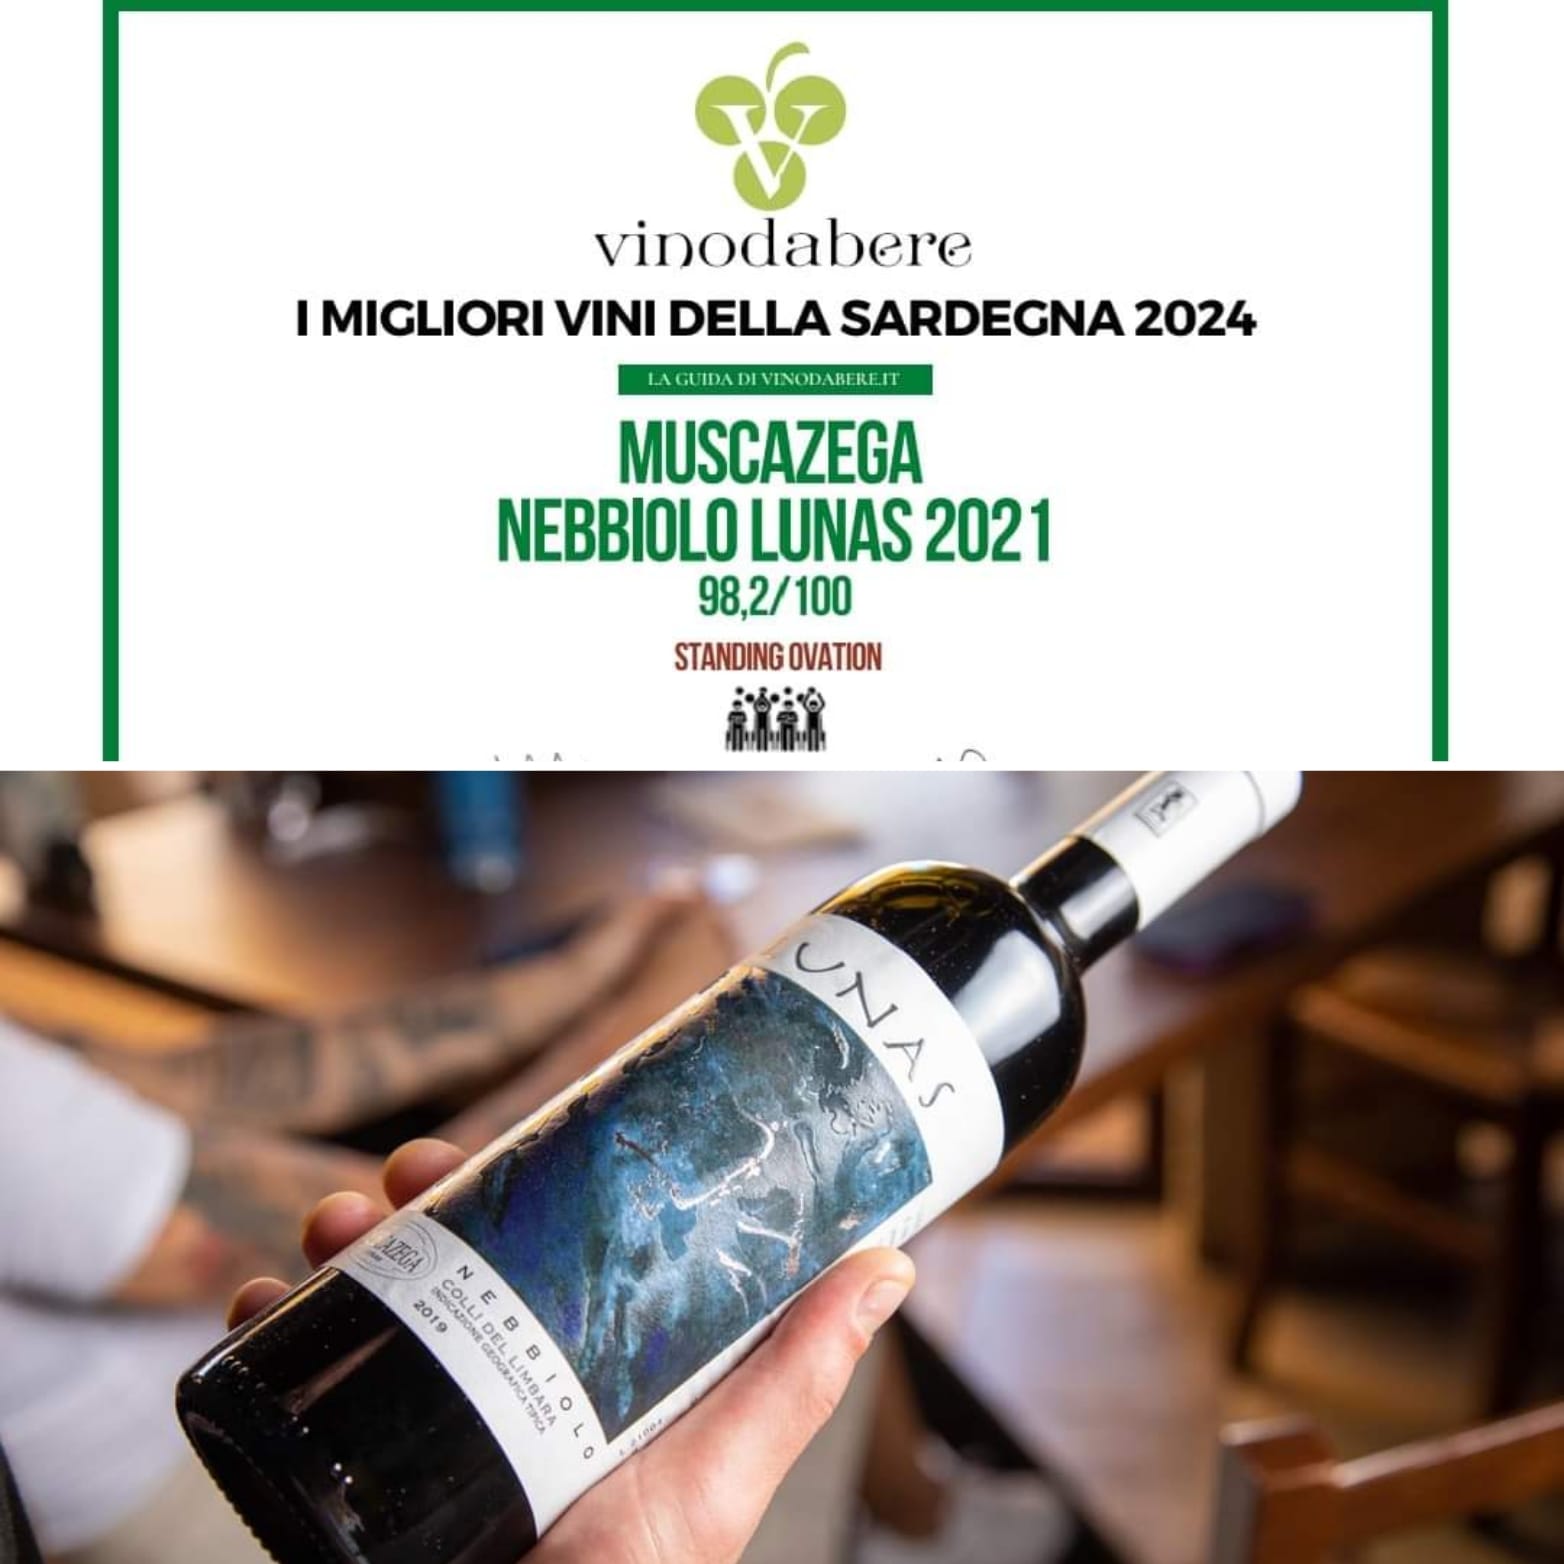 Standing Ovation di vinodabere "I migliori vini della Sardegna 2024"